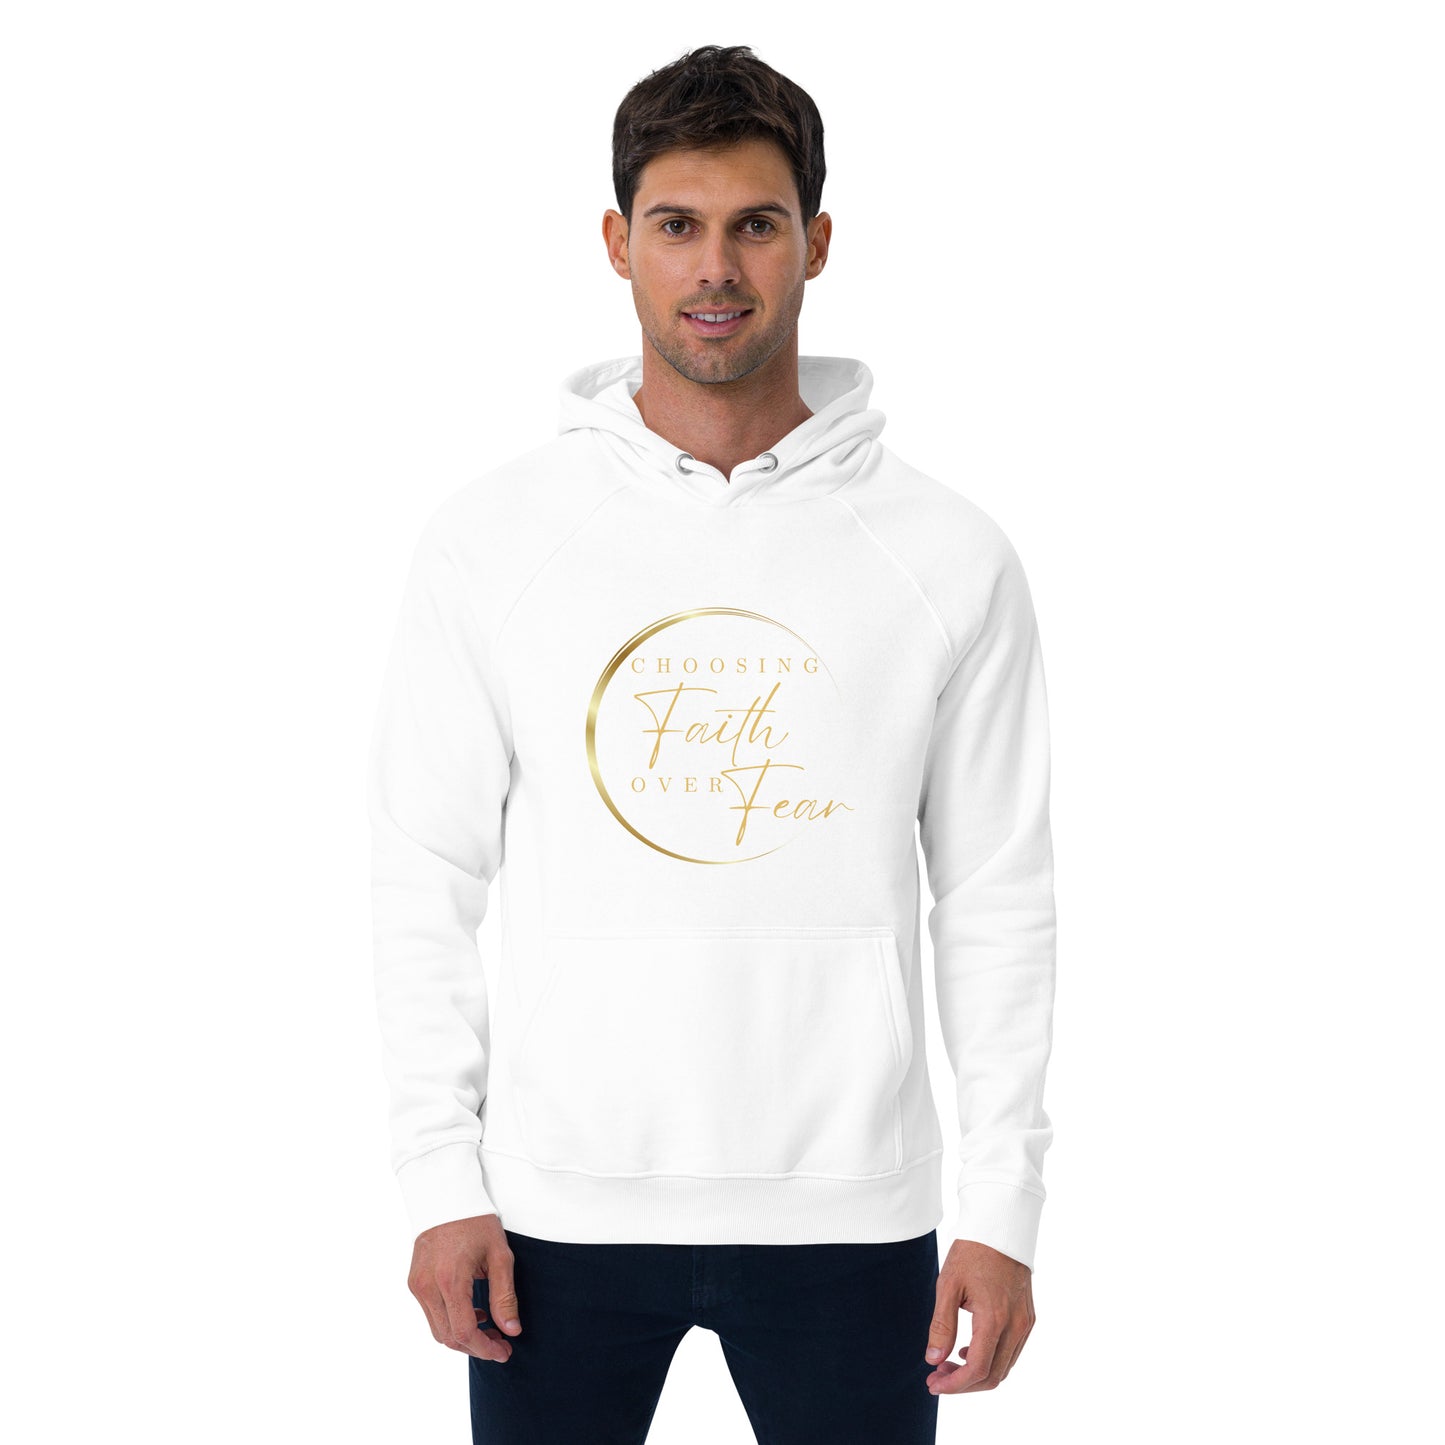 'Choosing Faith Over Fear' Unisex eco raglan hoodie